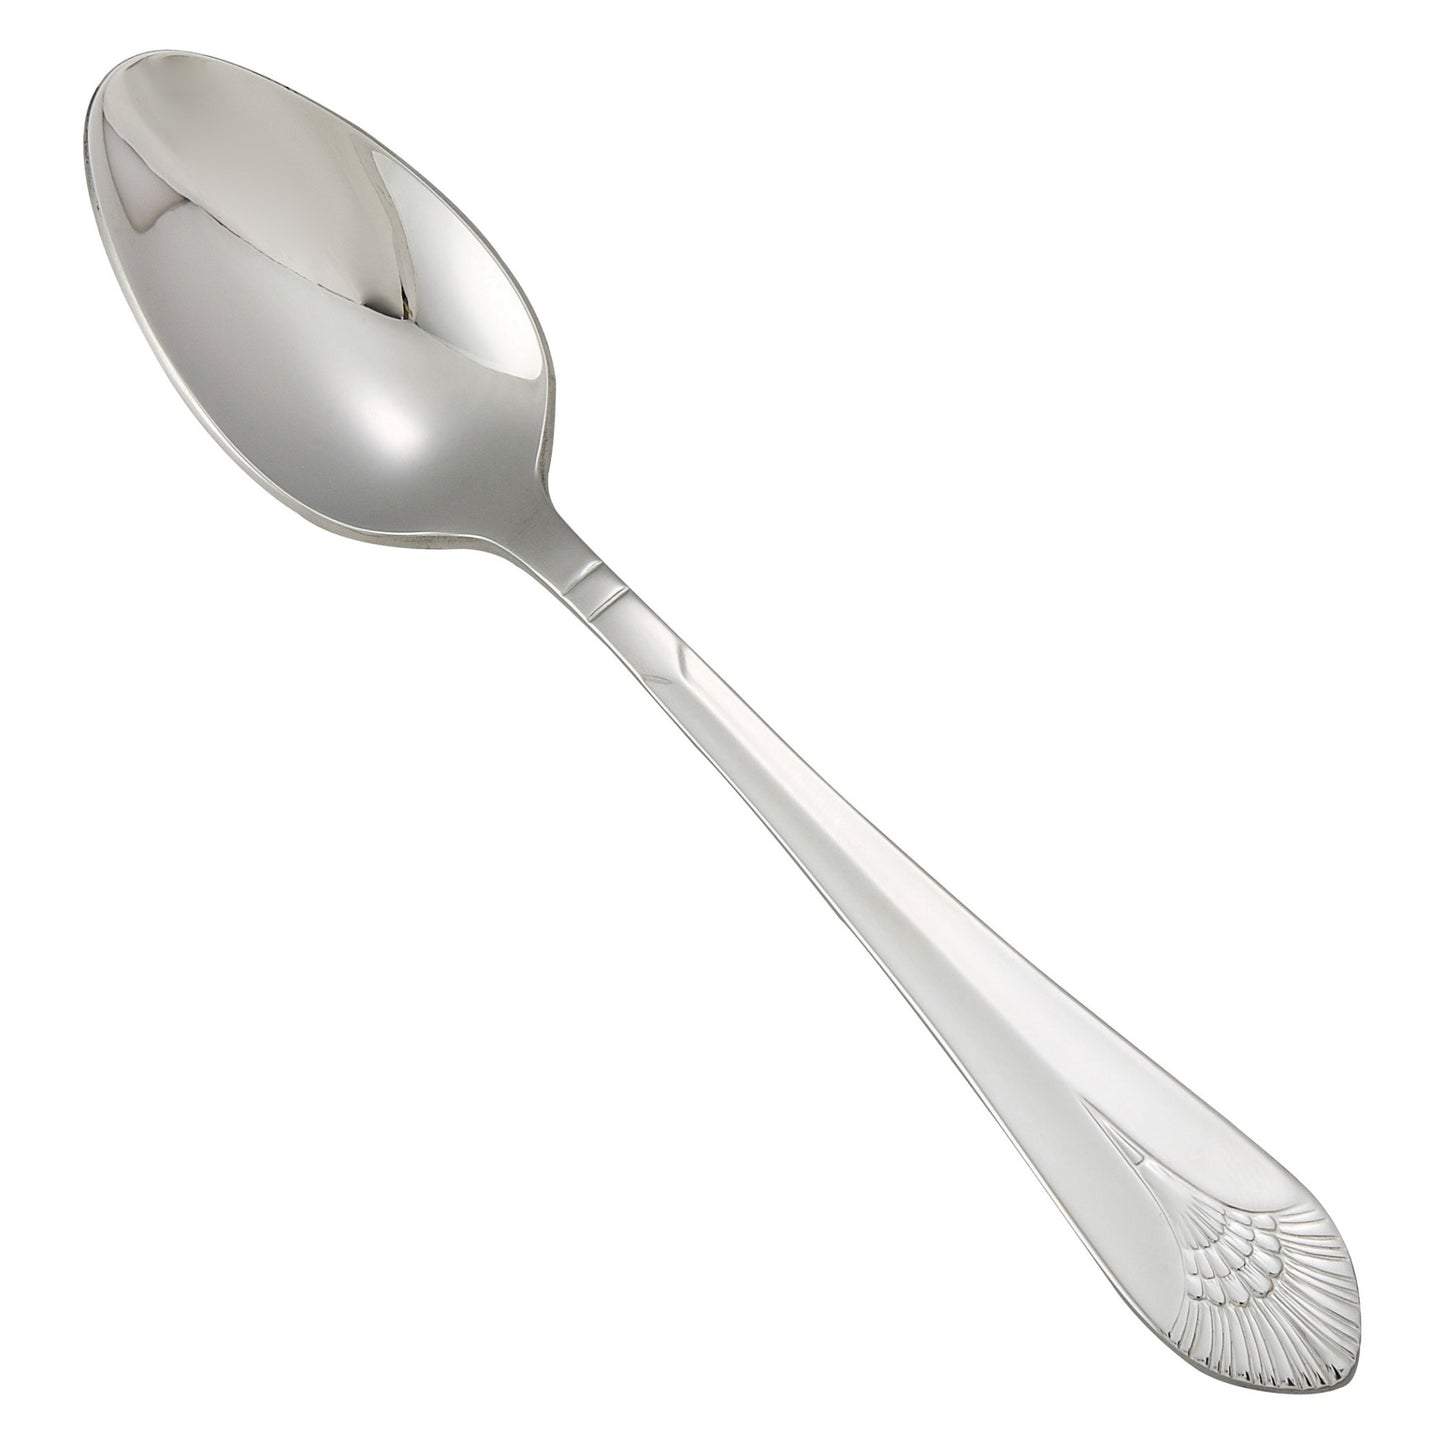 0031-03 - Peacock Dinner Spoon, 18/8 Extra Heavyweight